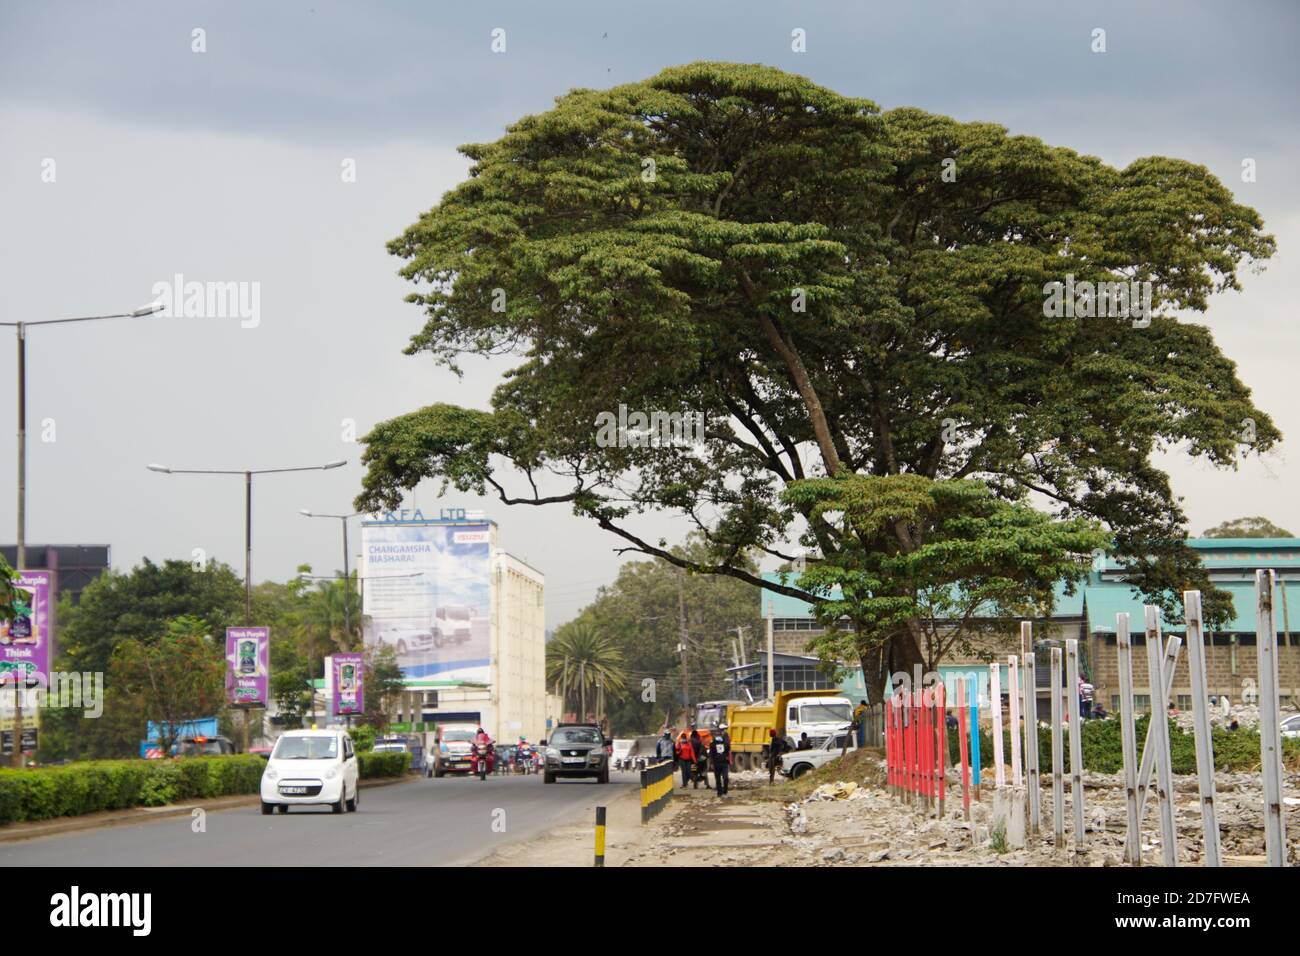 NAKURU, KENYA - Oct 17, 2020: Normal everyday life in the town of Nakuru, Kenya Stock Photo